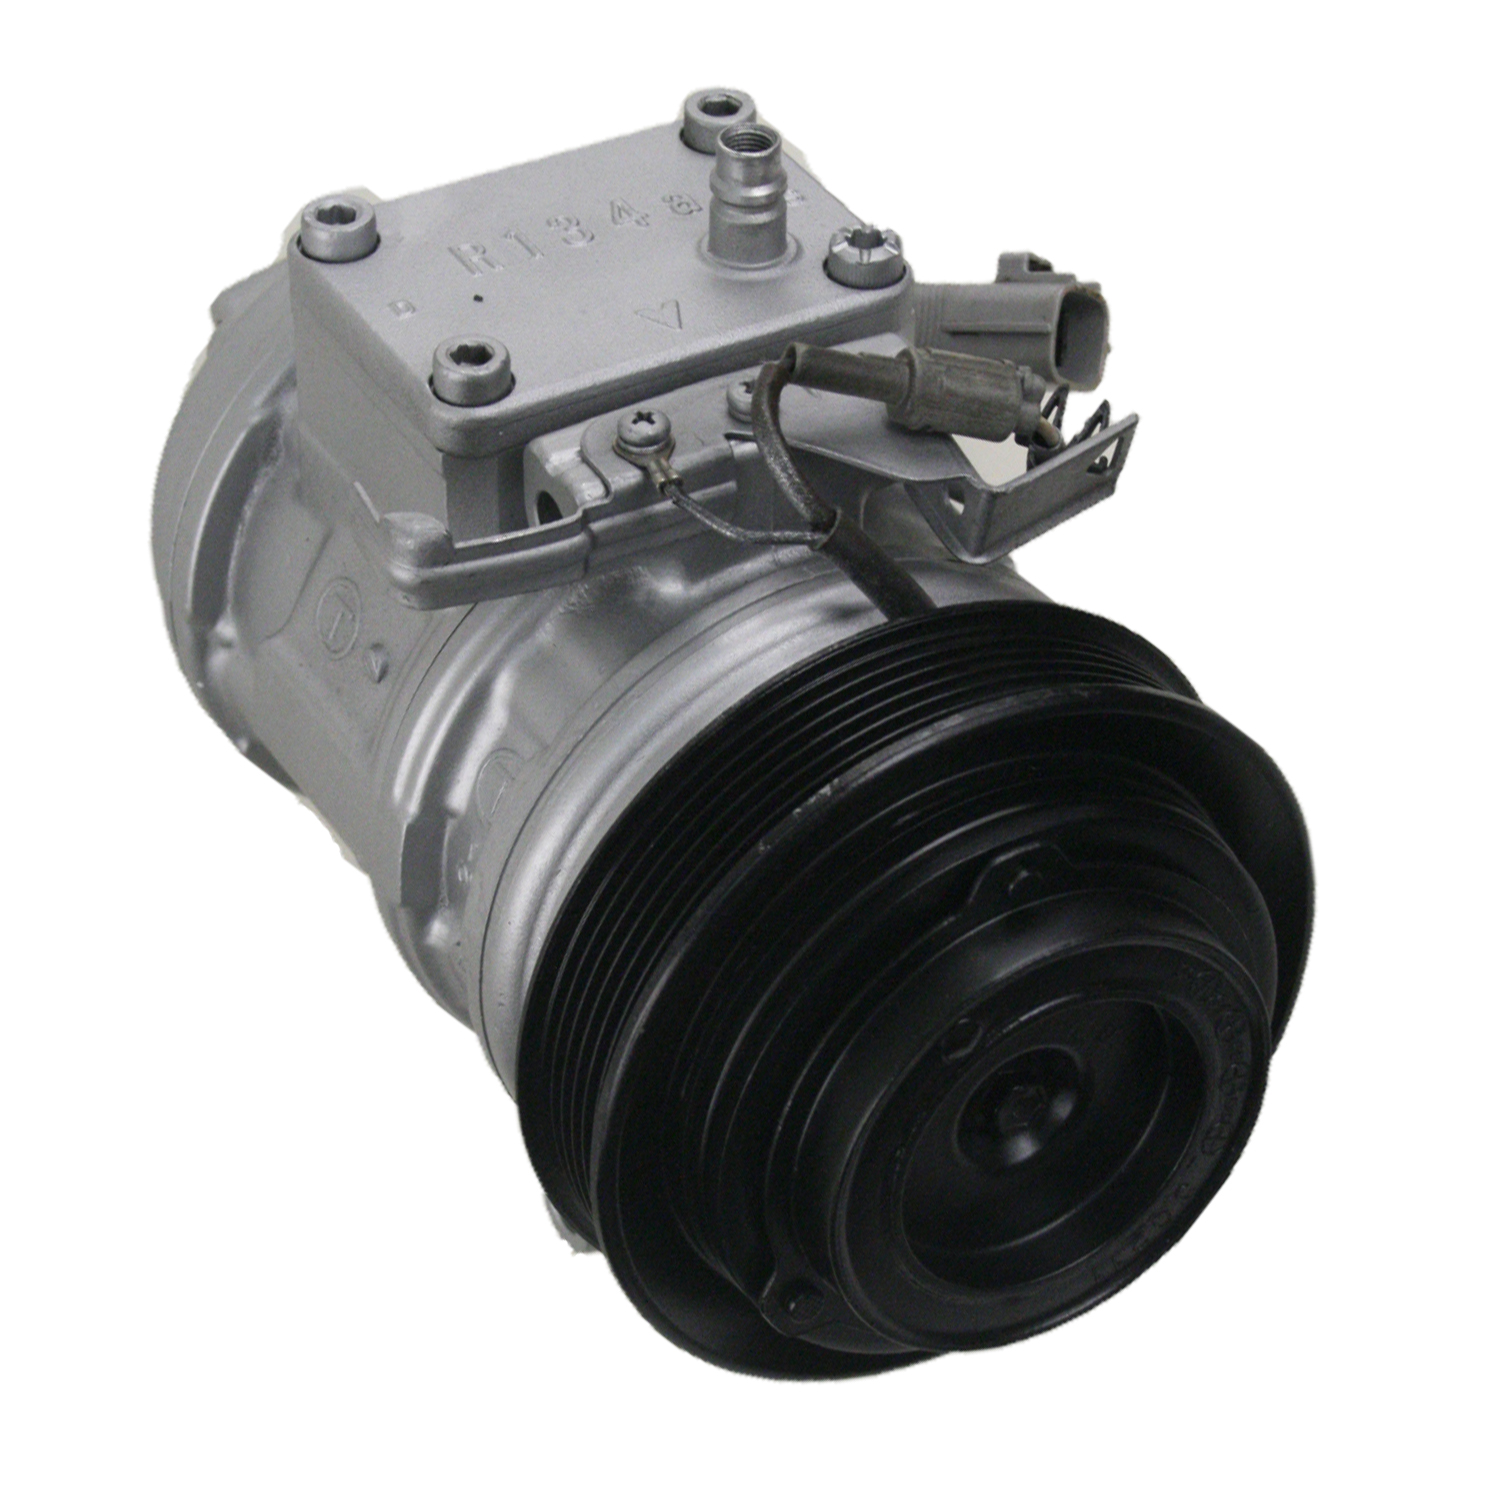 TCW Compressor 31344.601 Remanufactured Product Image field_60b6a13a6e67c